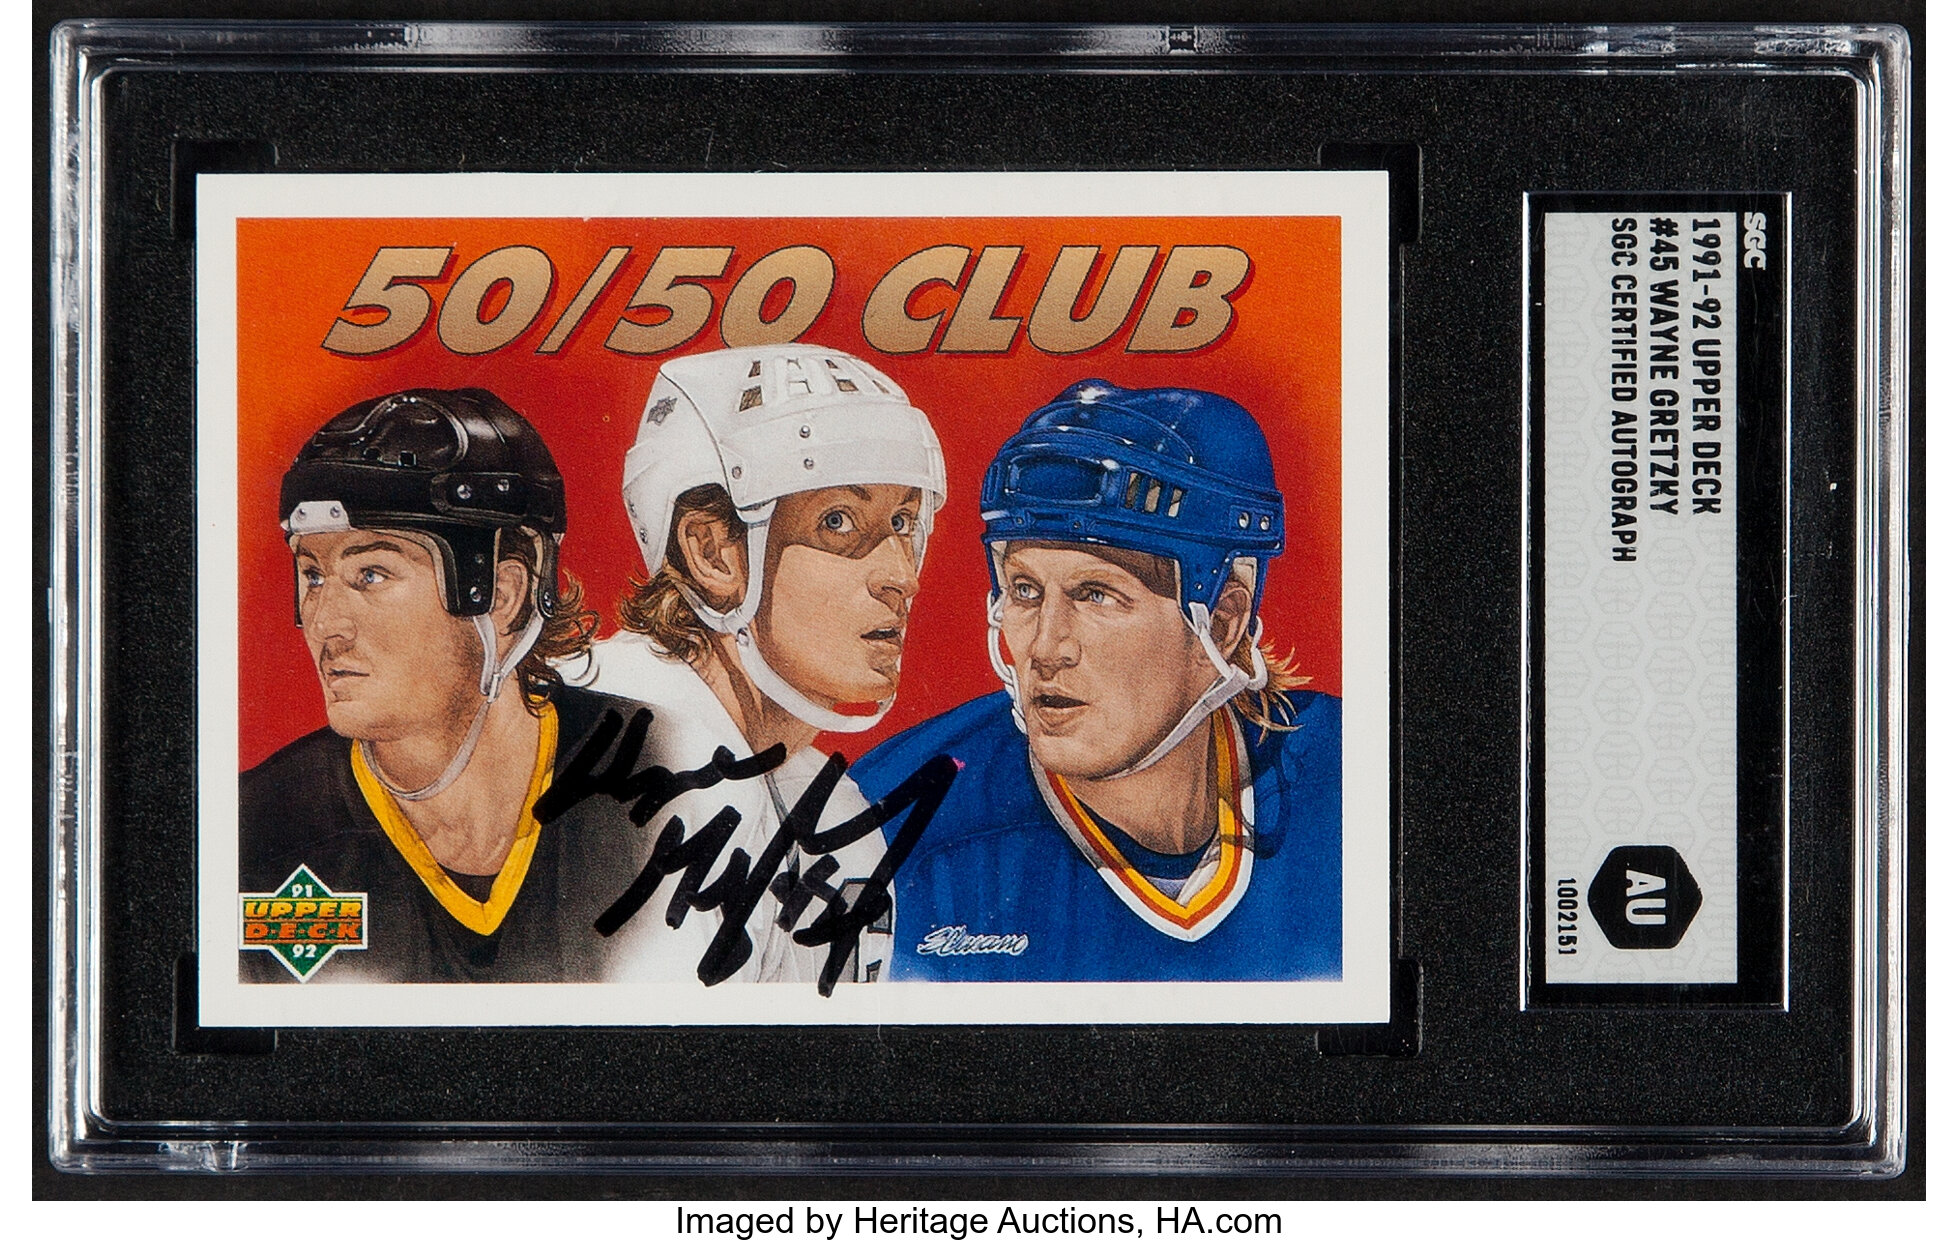 Sold at Auction: Wayne Gretzky Signed 1992-93 Upper Deck Card #33 (JSA +  SGC Authentic)